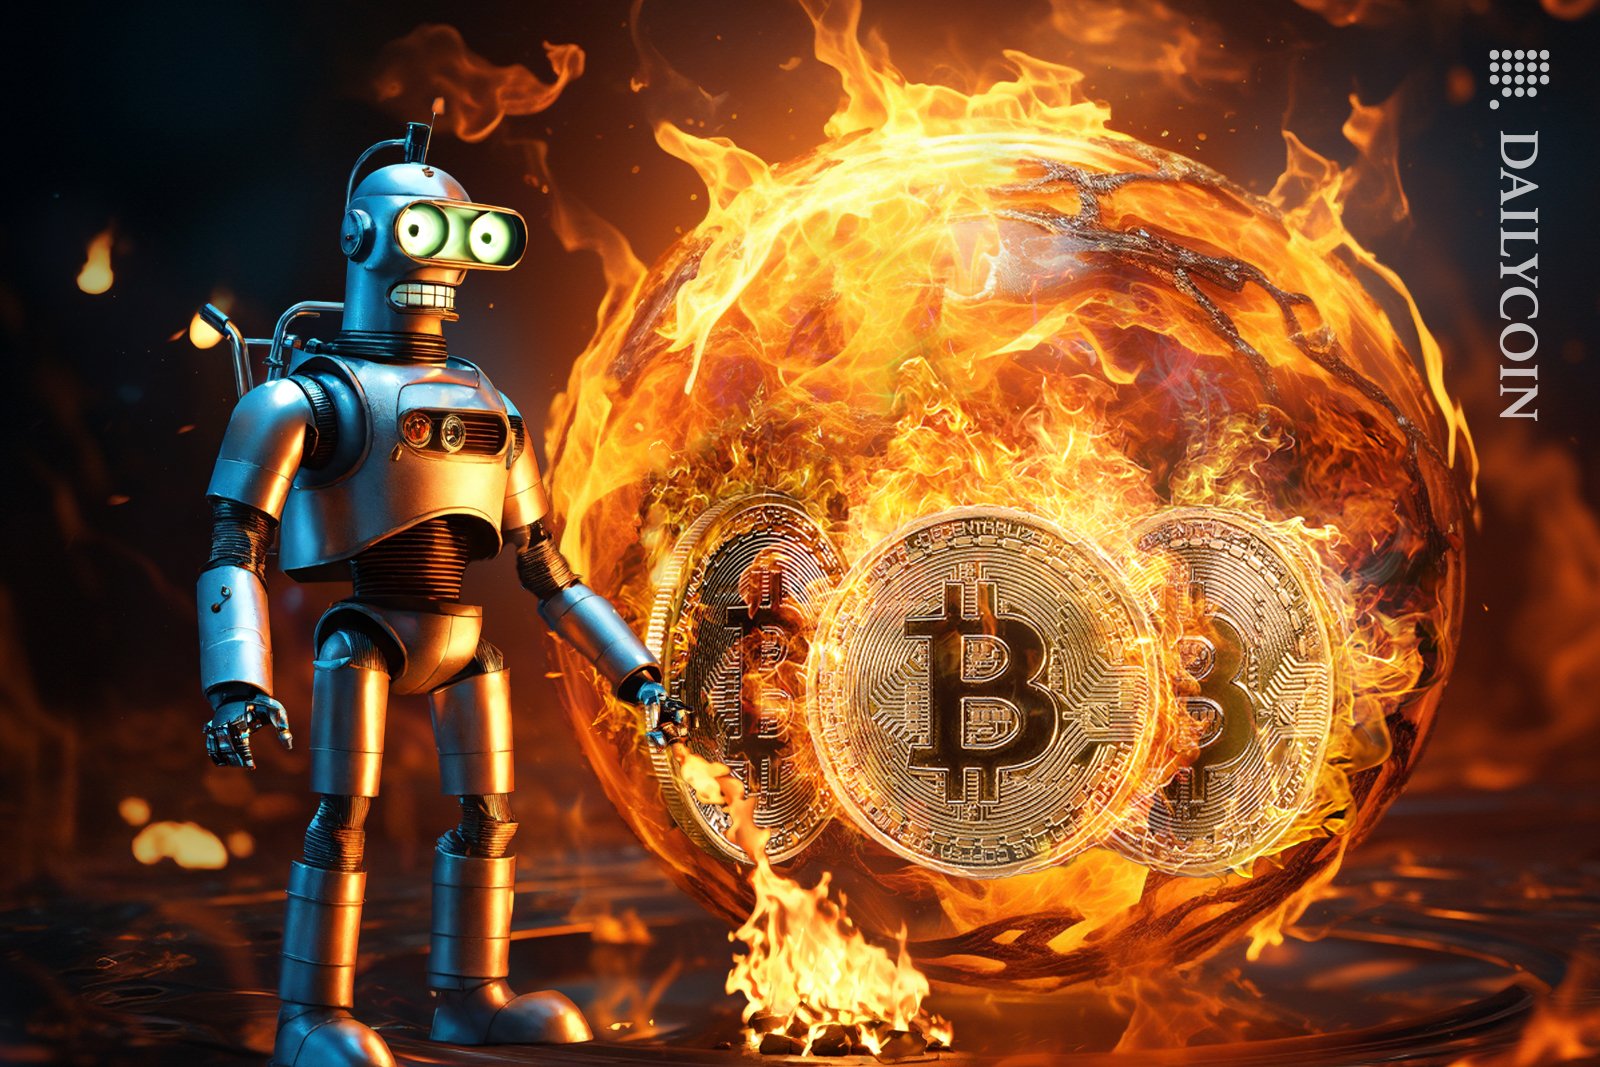 Robot worrying about Bitcoins crashing and burning.